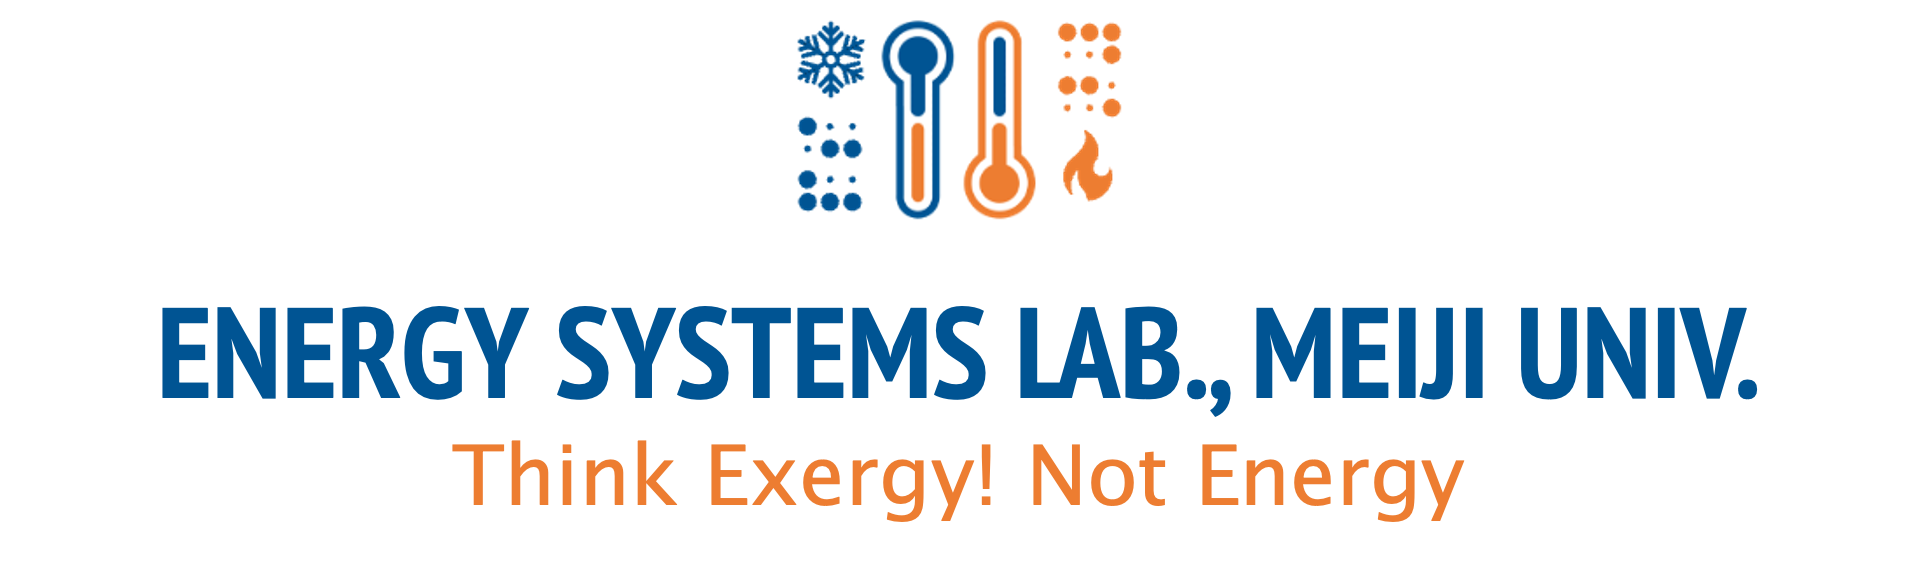 Energy Systems Lab., Meiji University